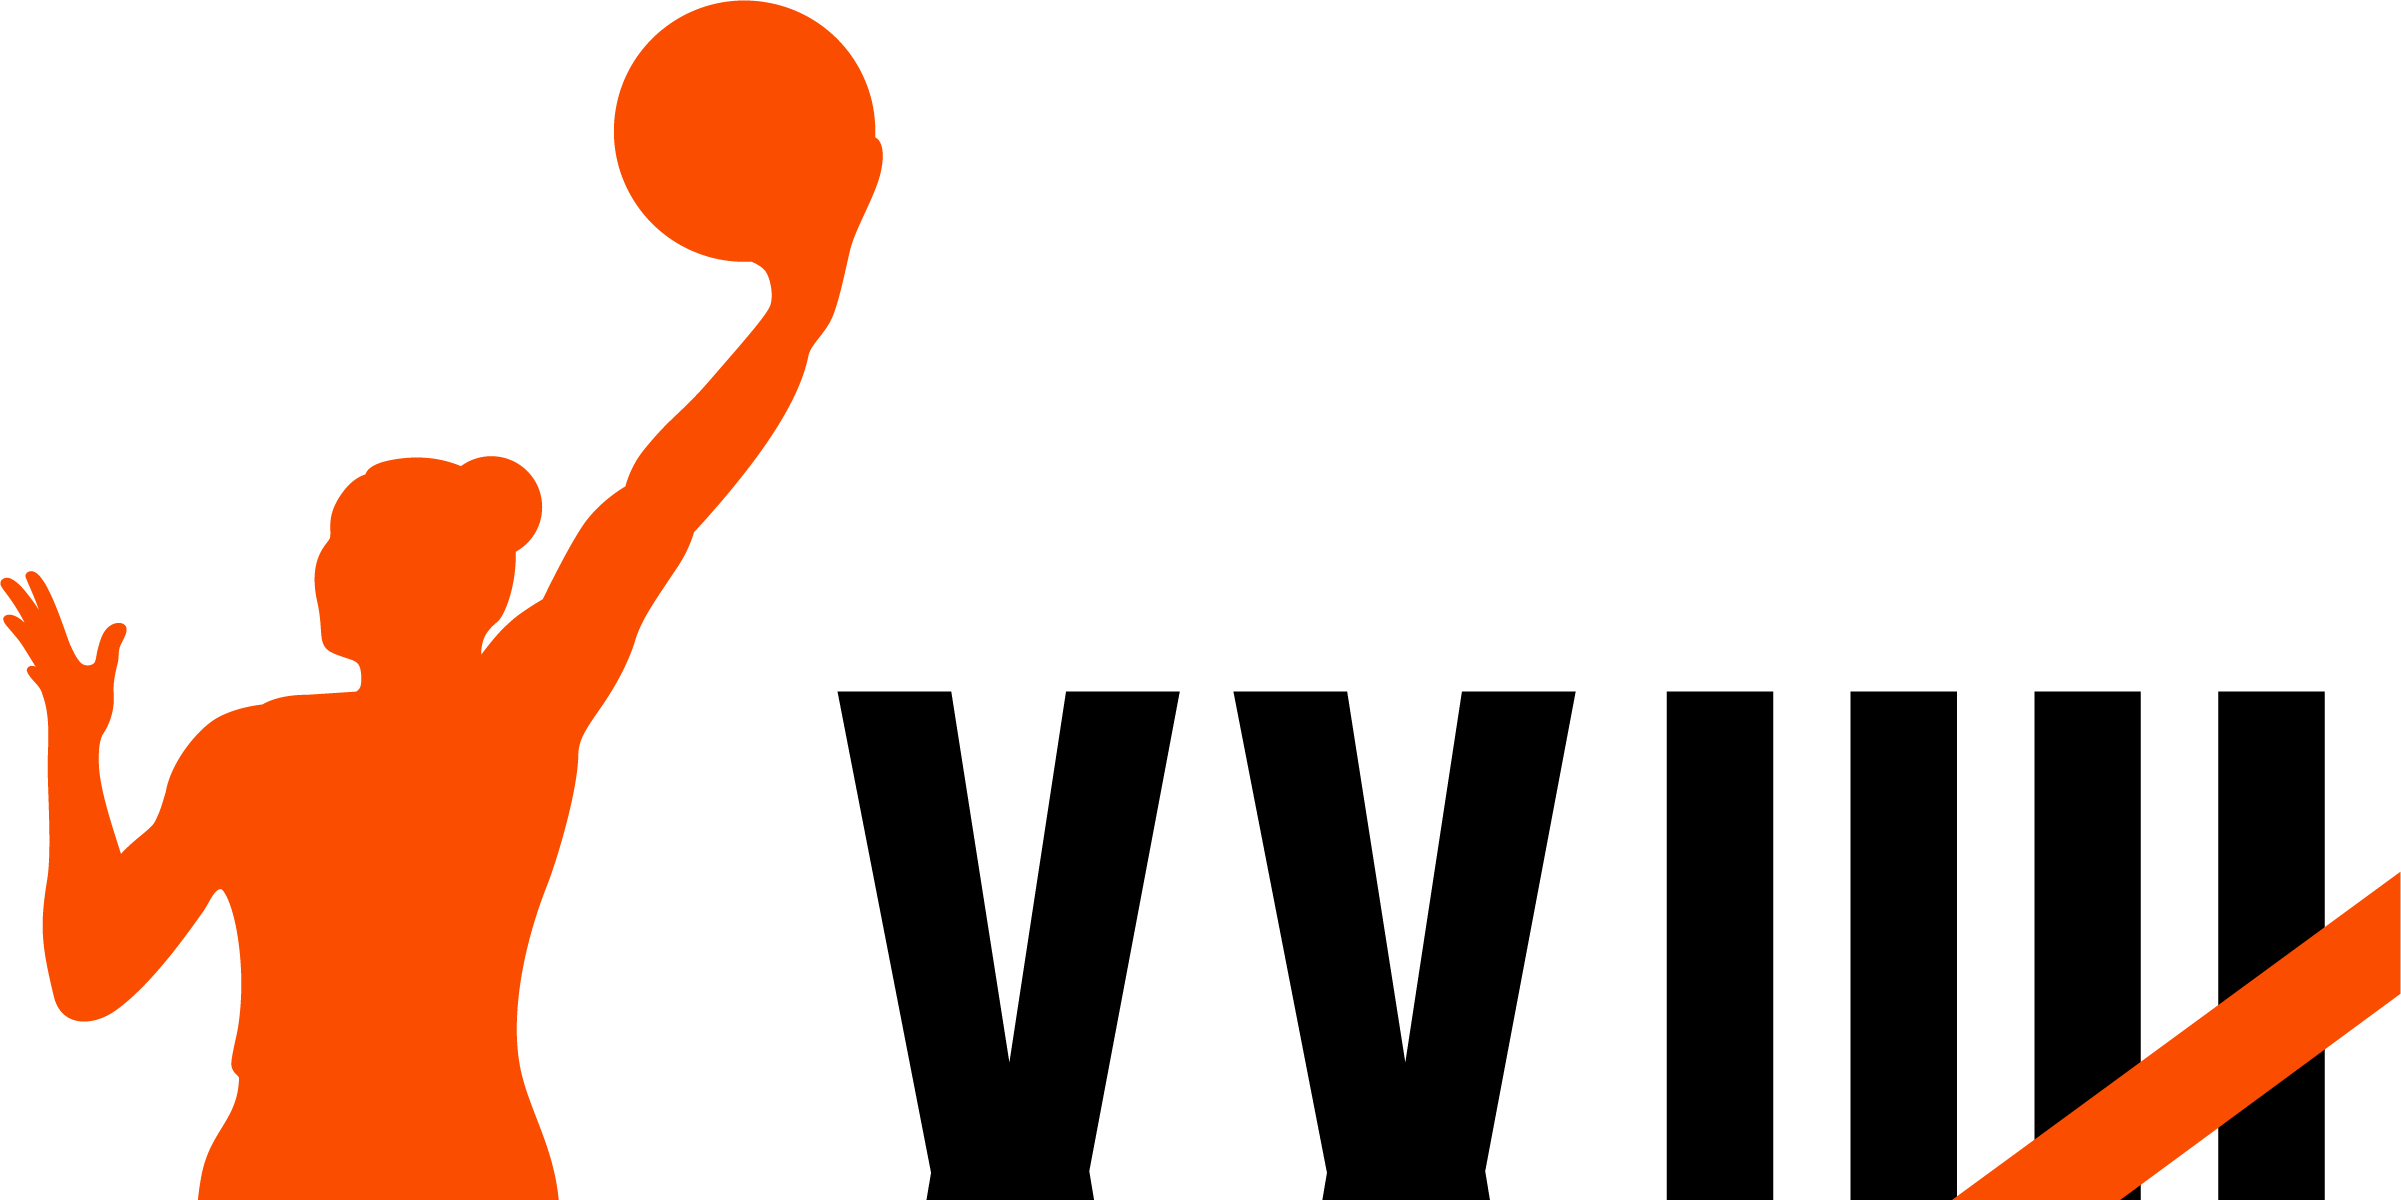 wnba basketball logos